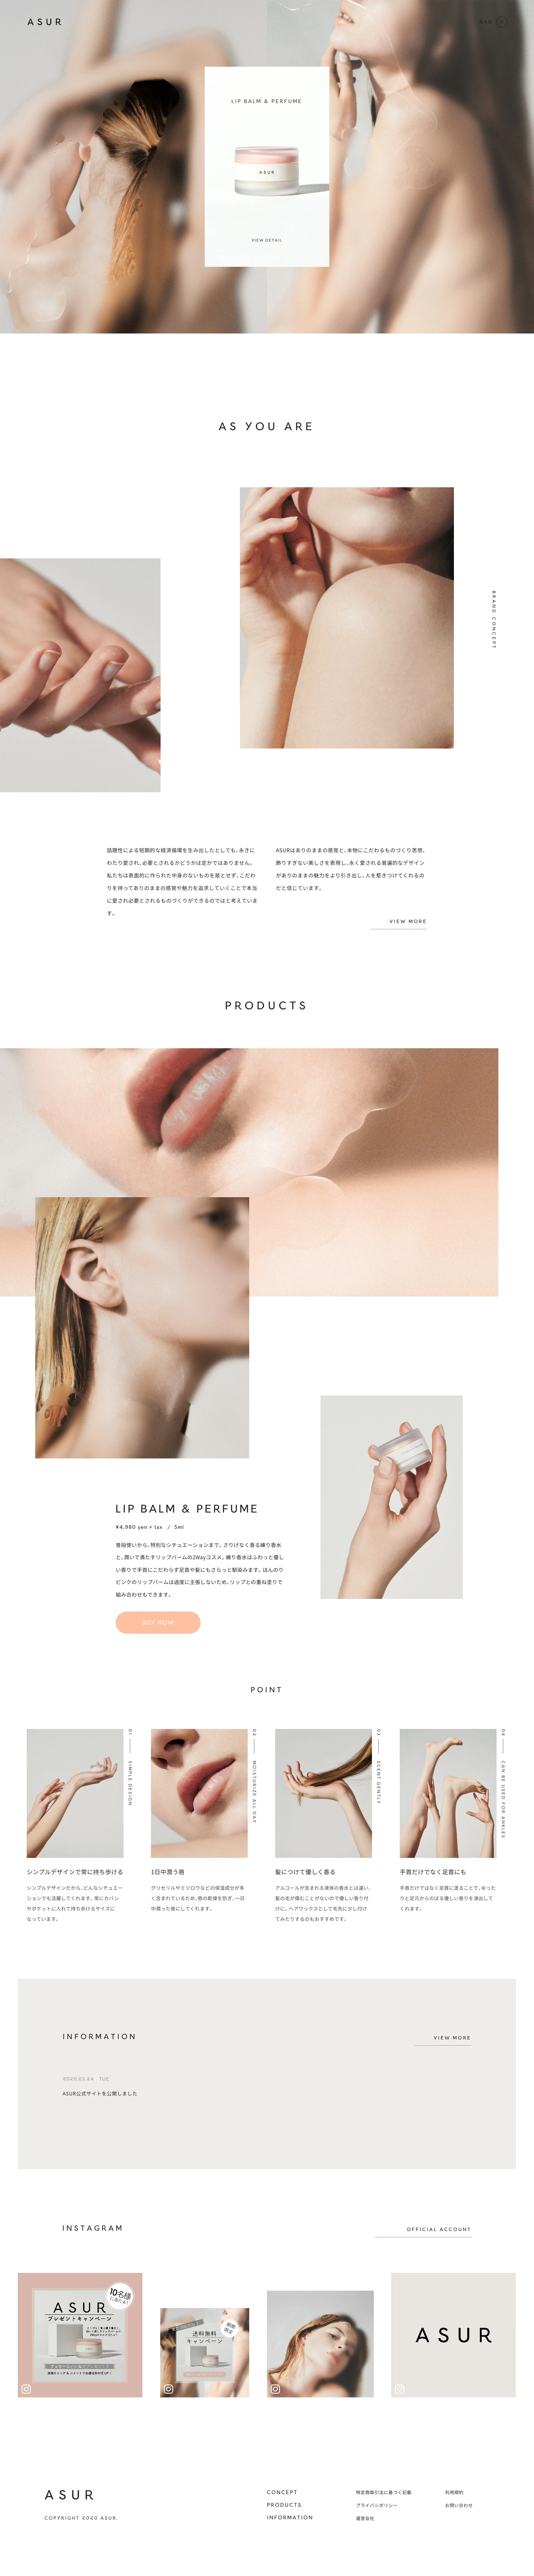 ASUR Landing Page Example: Lip balm & Perfume